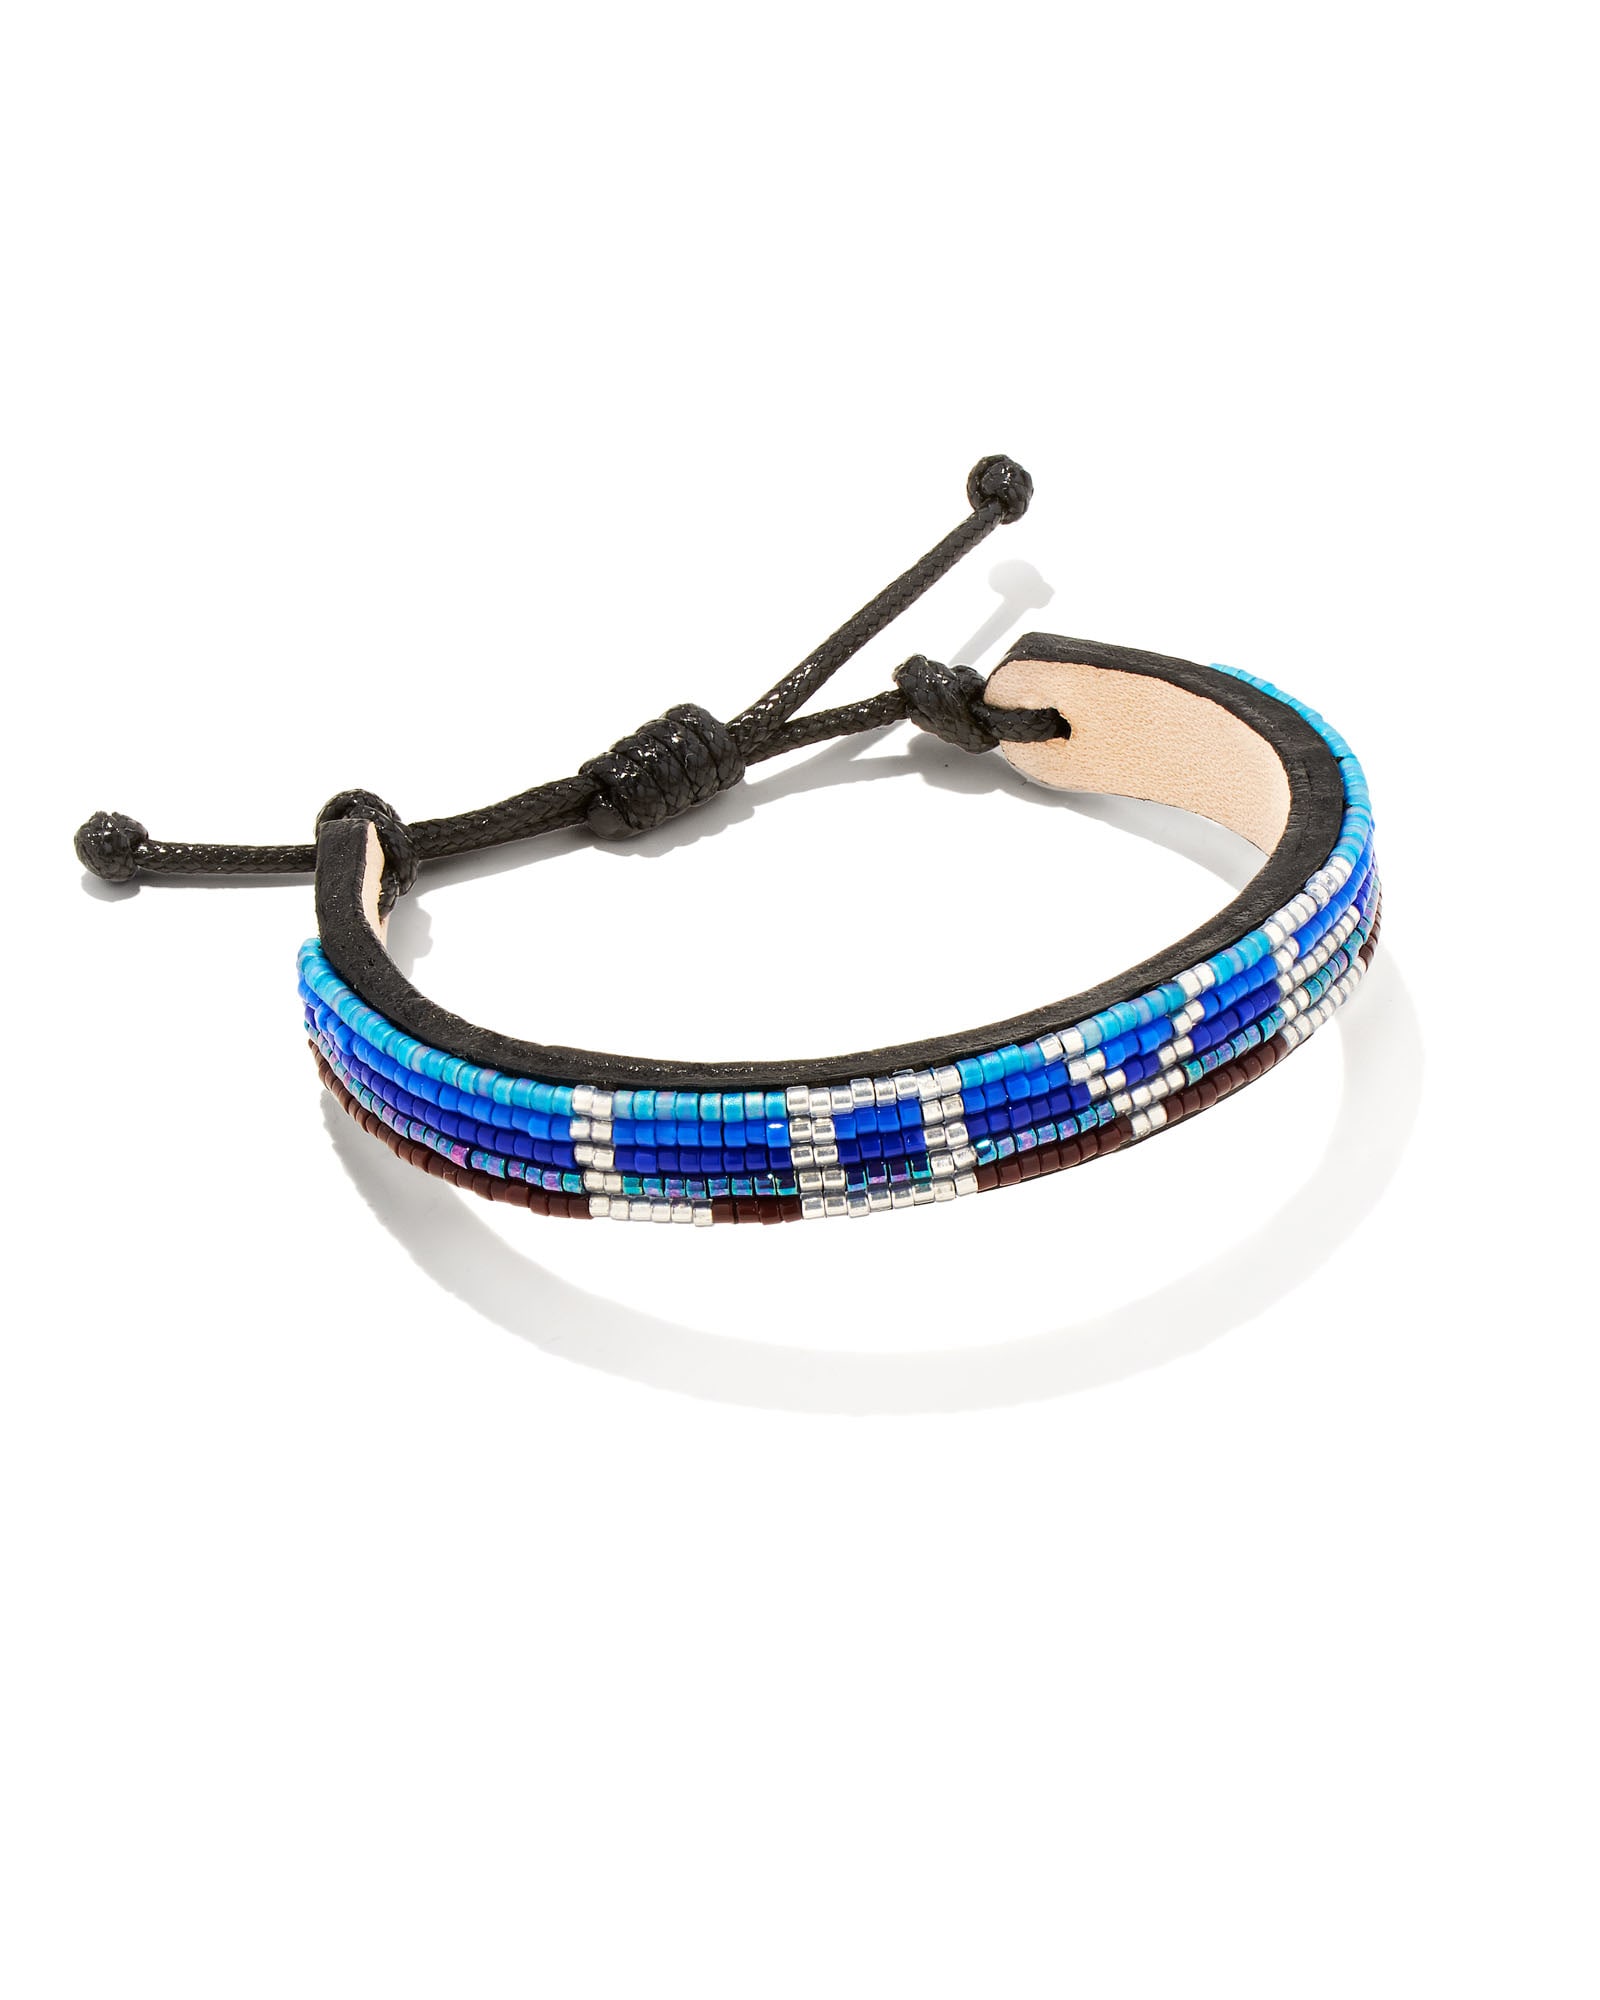 Kendra Scott Love Beaded Friendship Bracelet in Blue Ombre Mix | Miyuki Delica Beads/Leather